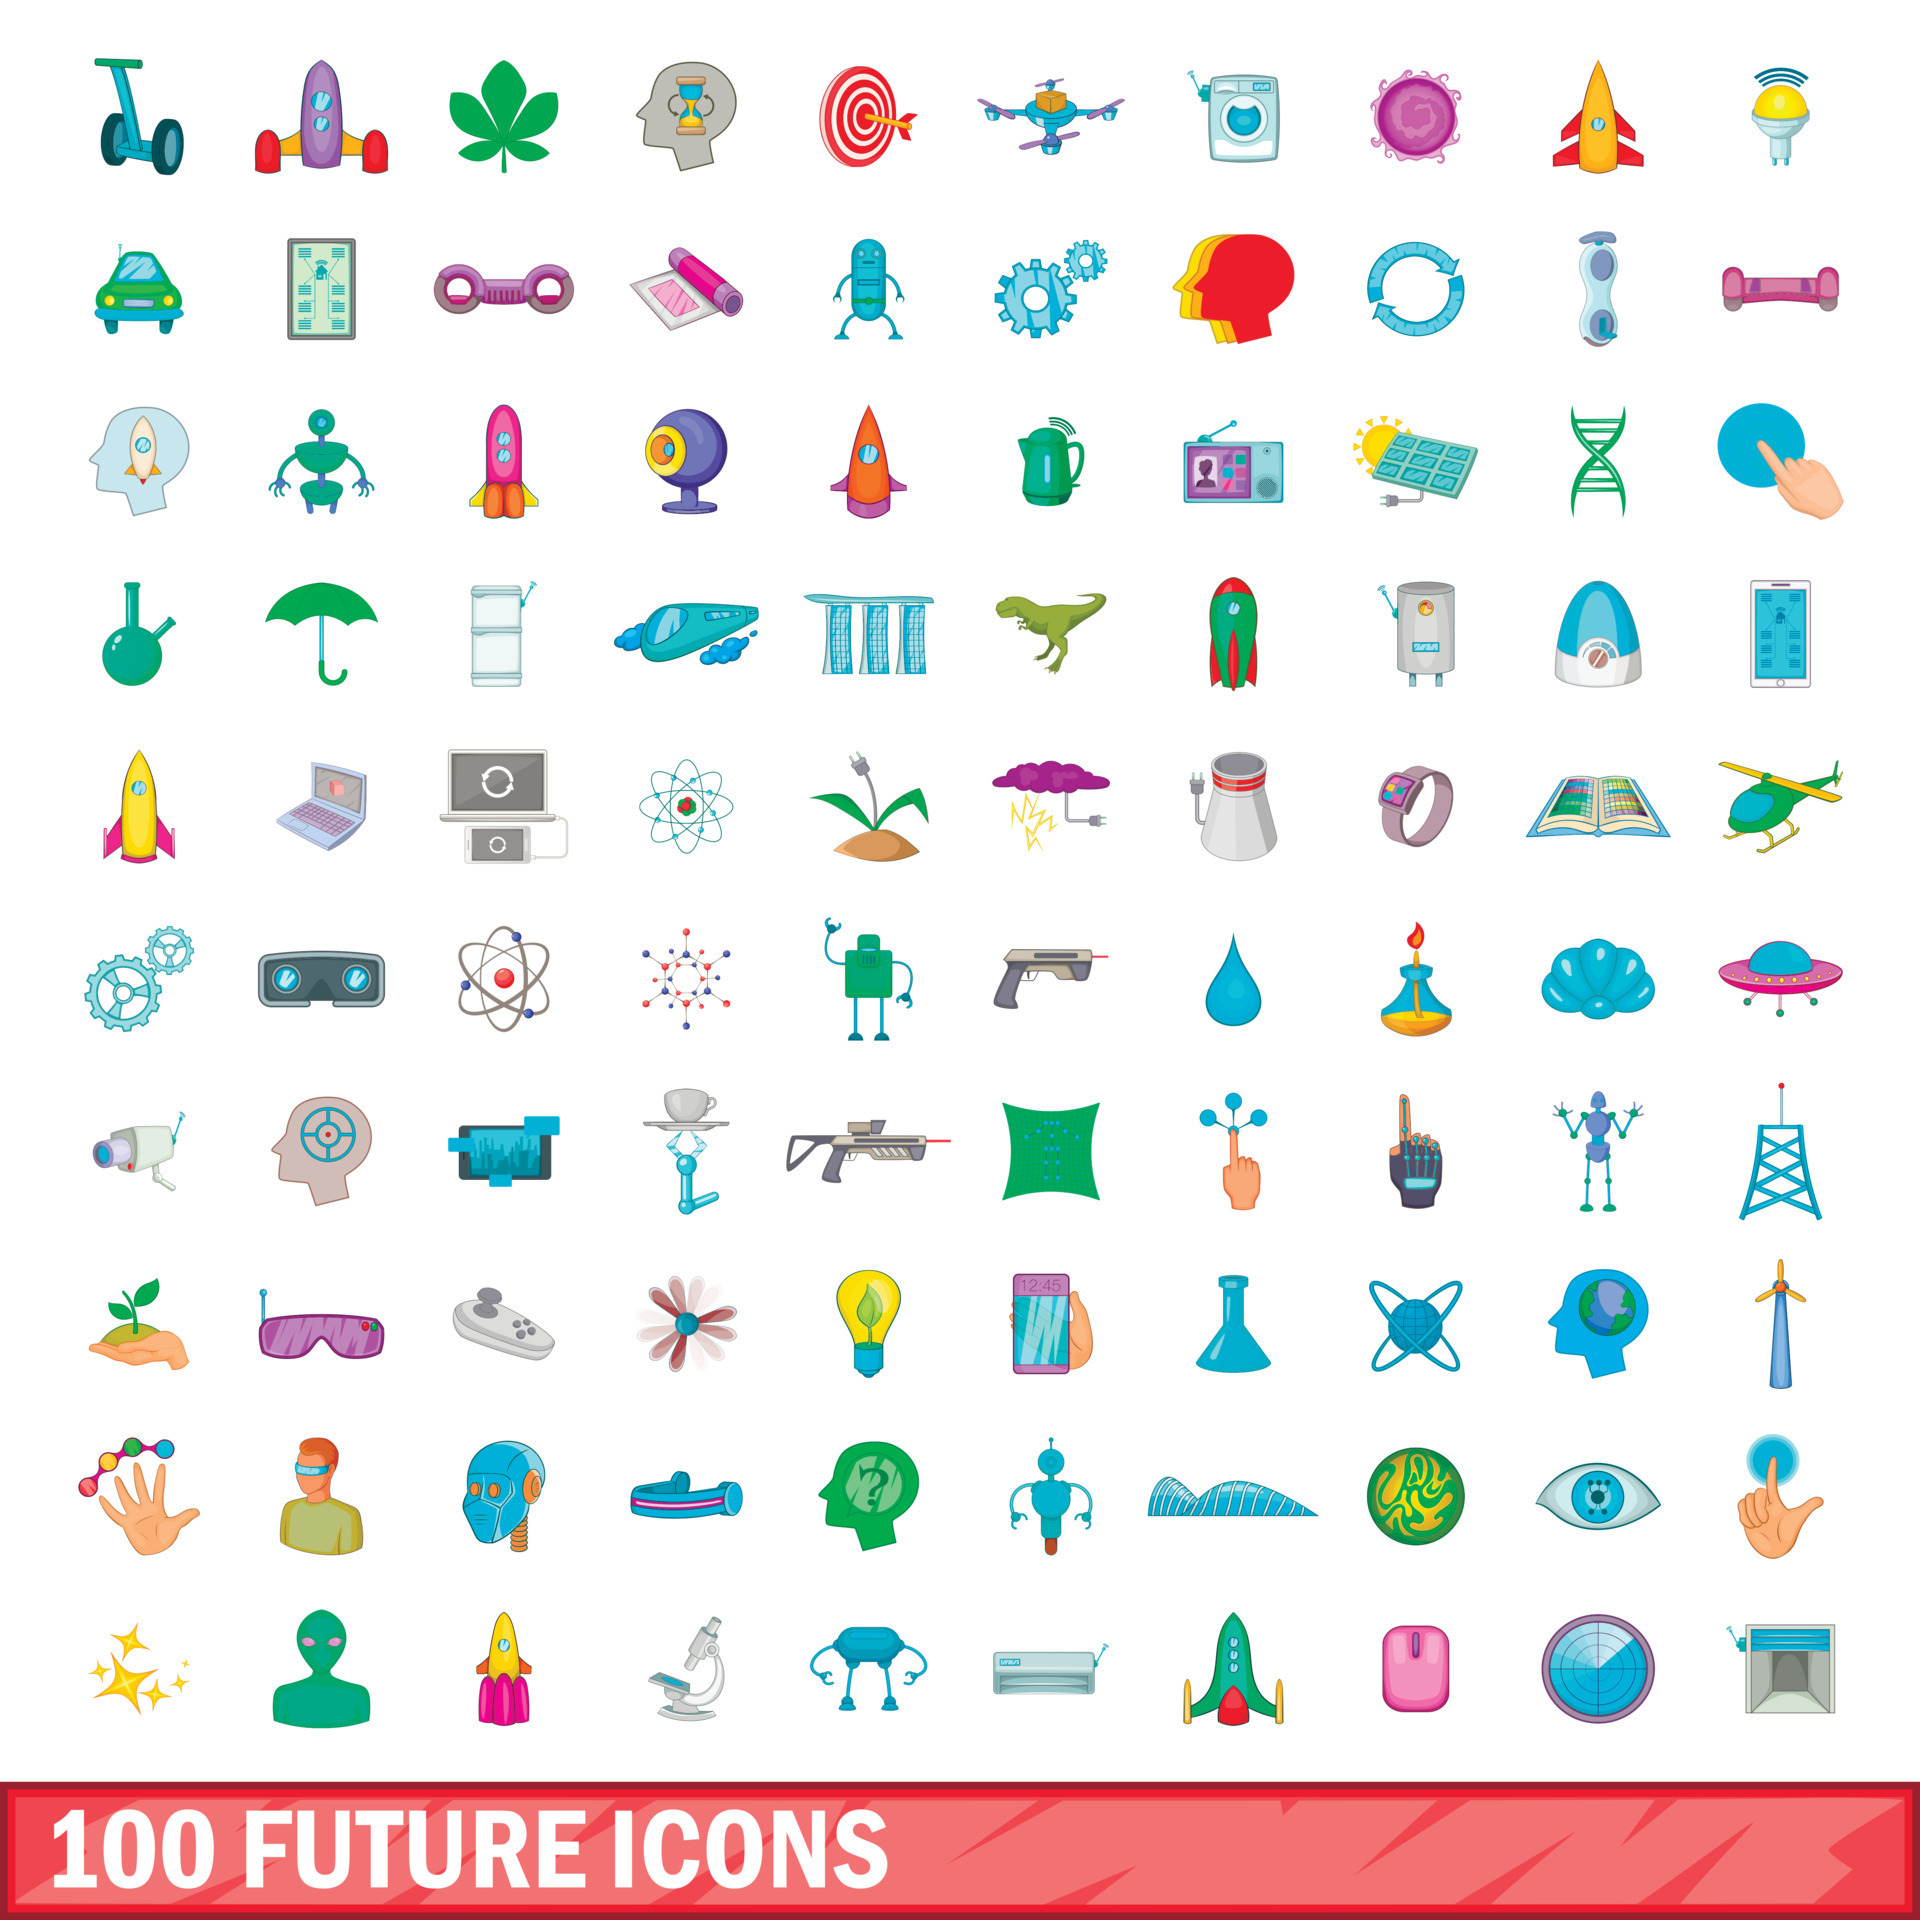 https://static.vecteezy.com/system/resources/previews/008/457/877/original/100-future-icons-set-cartoon-style-vector.jpg